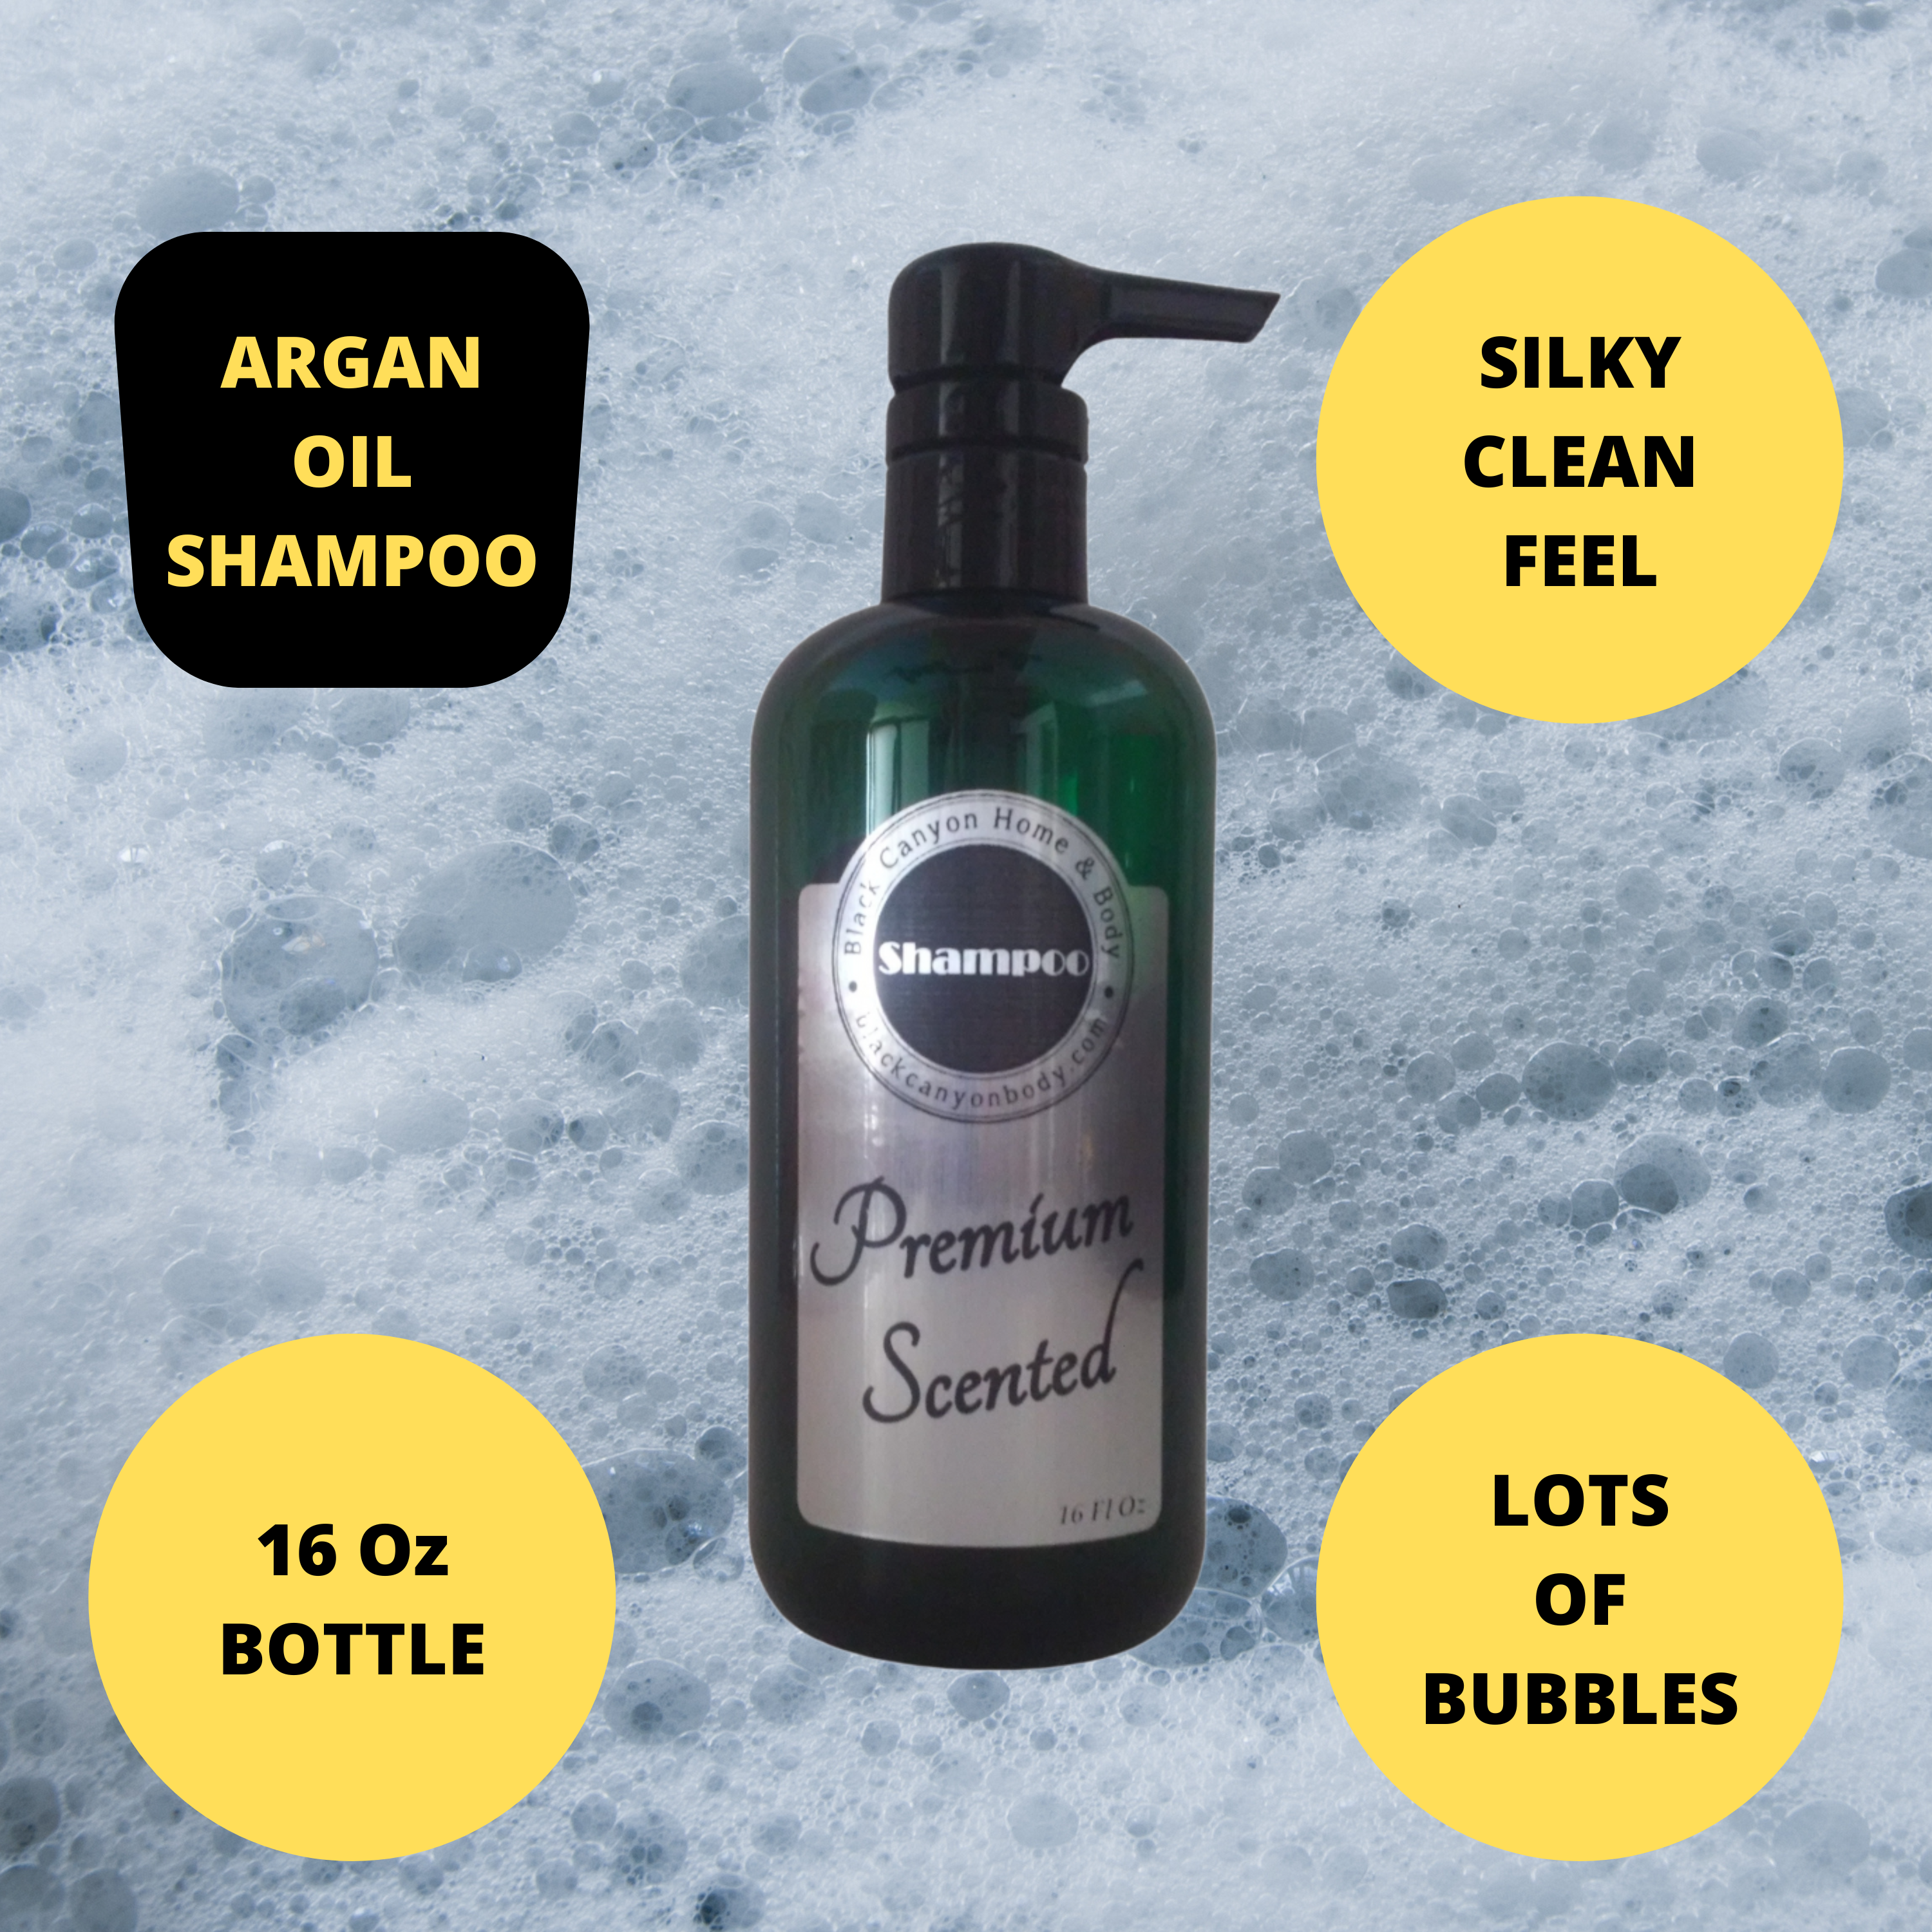 Black Canyon Lemon Tart Scented Shampoo with Argan Oil